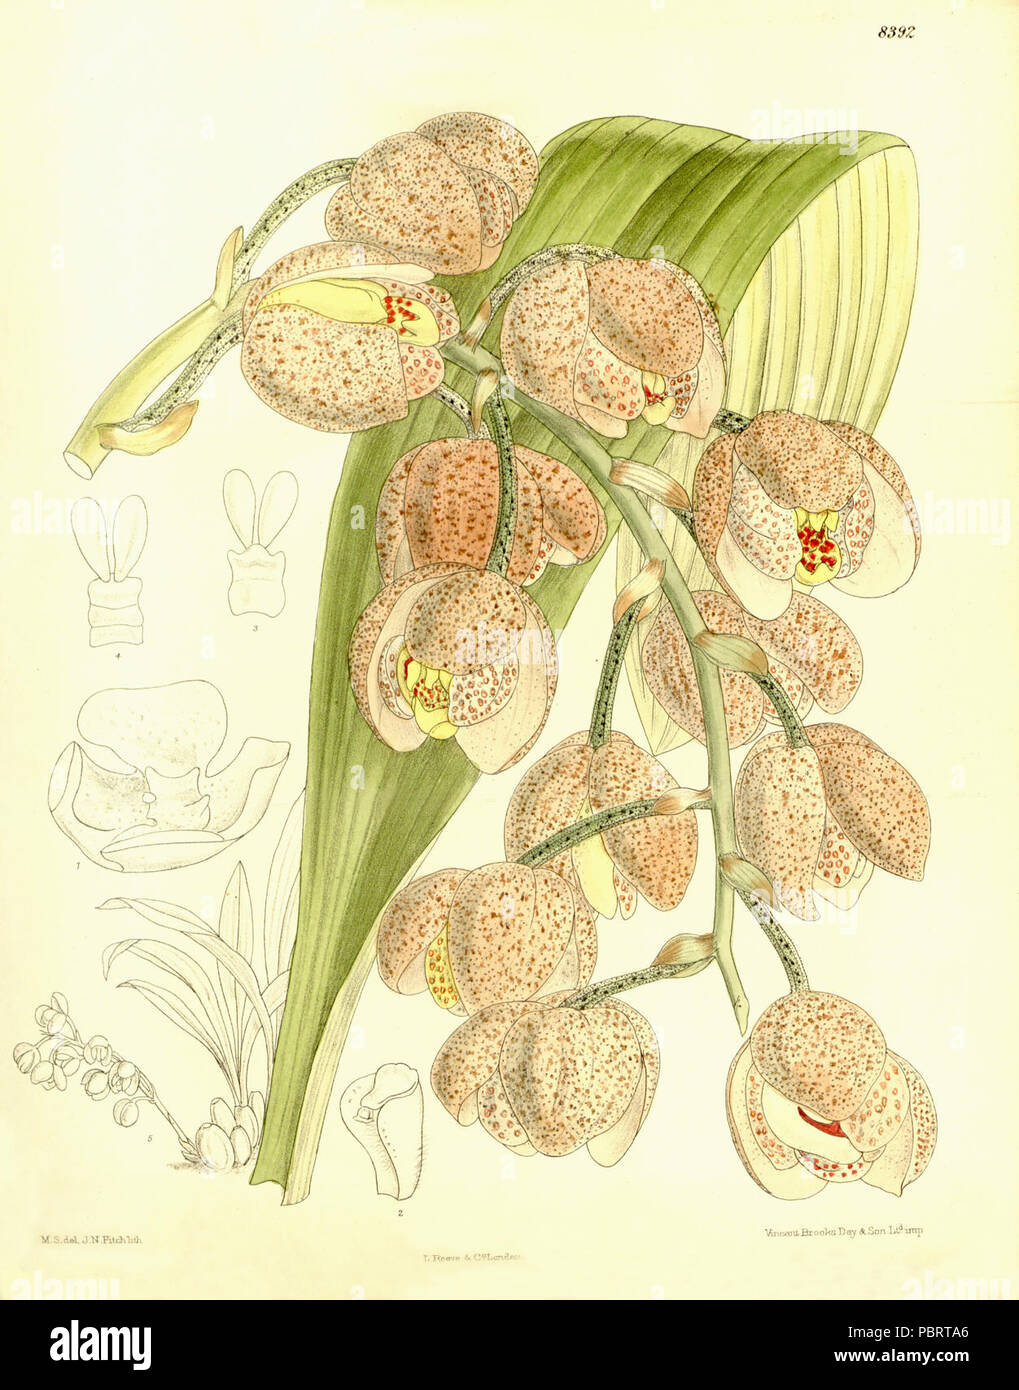 Acineta hrubyana (as Acineta moorei) - Curtis' 137 (Ser. 4 no. 7) pl. 8392 (1911). Stock Photo